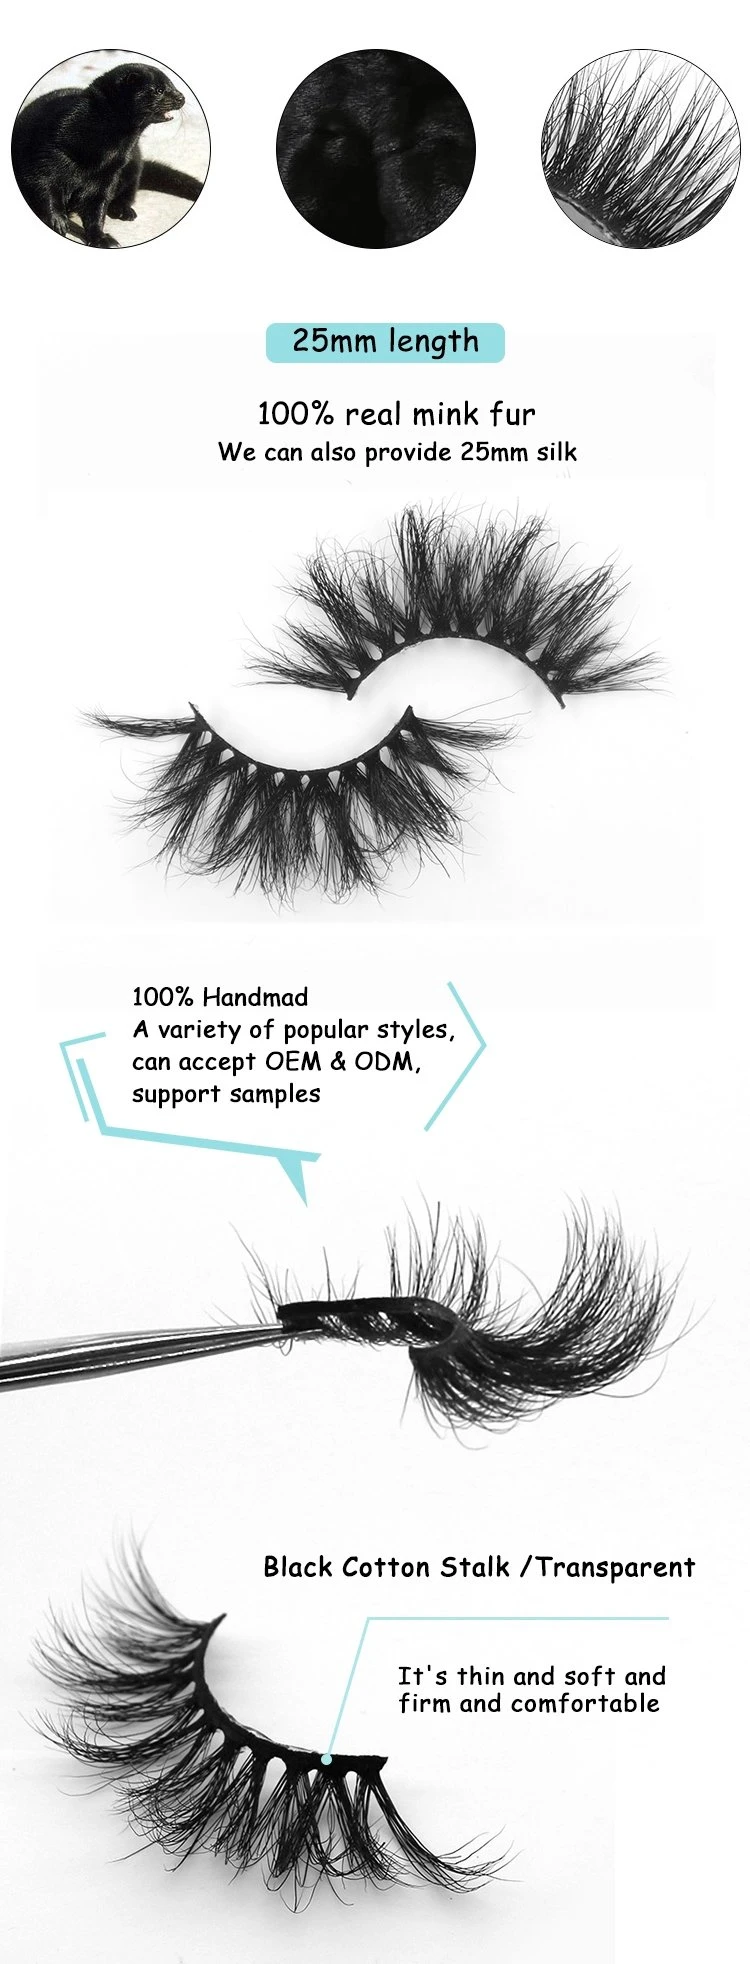 Real Mink Fur Eye Lashes Long Length 25mm Faux Eyelash